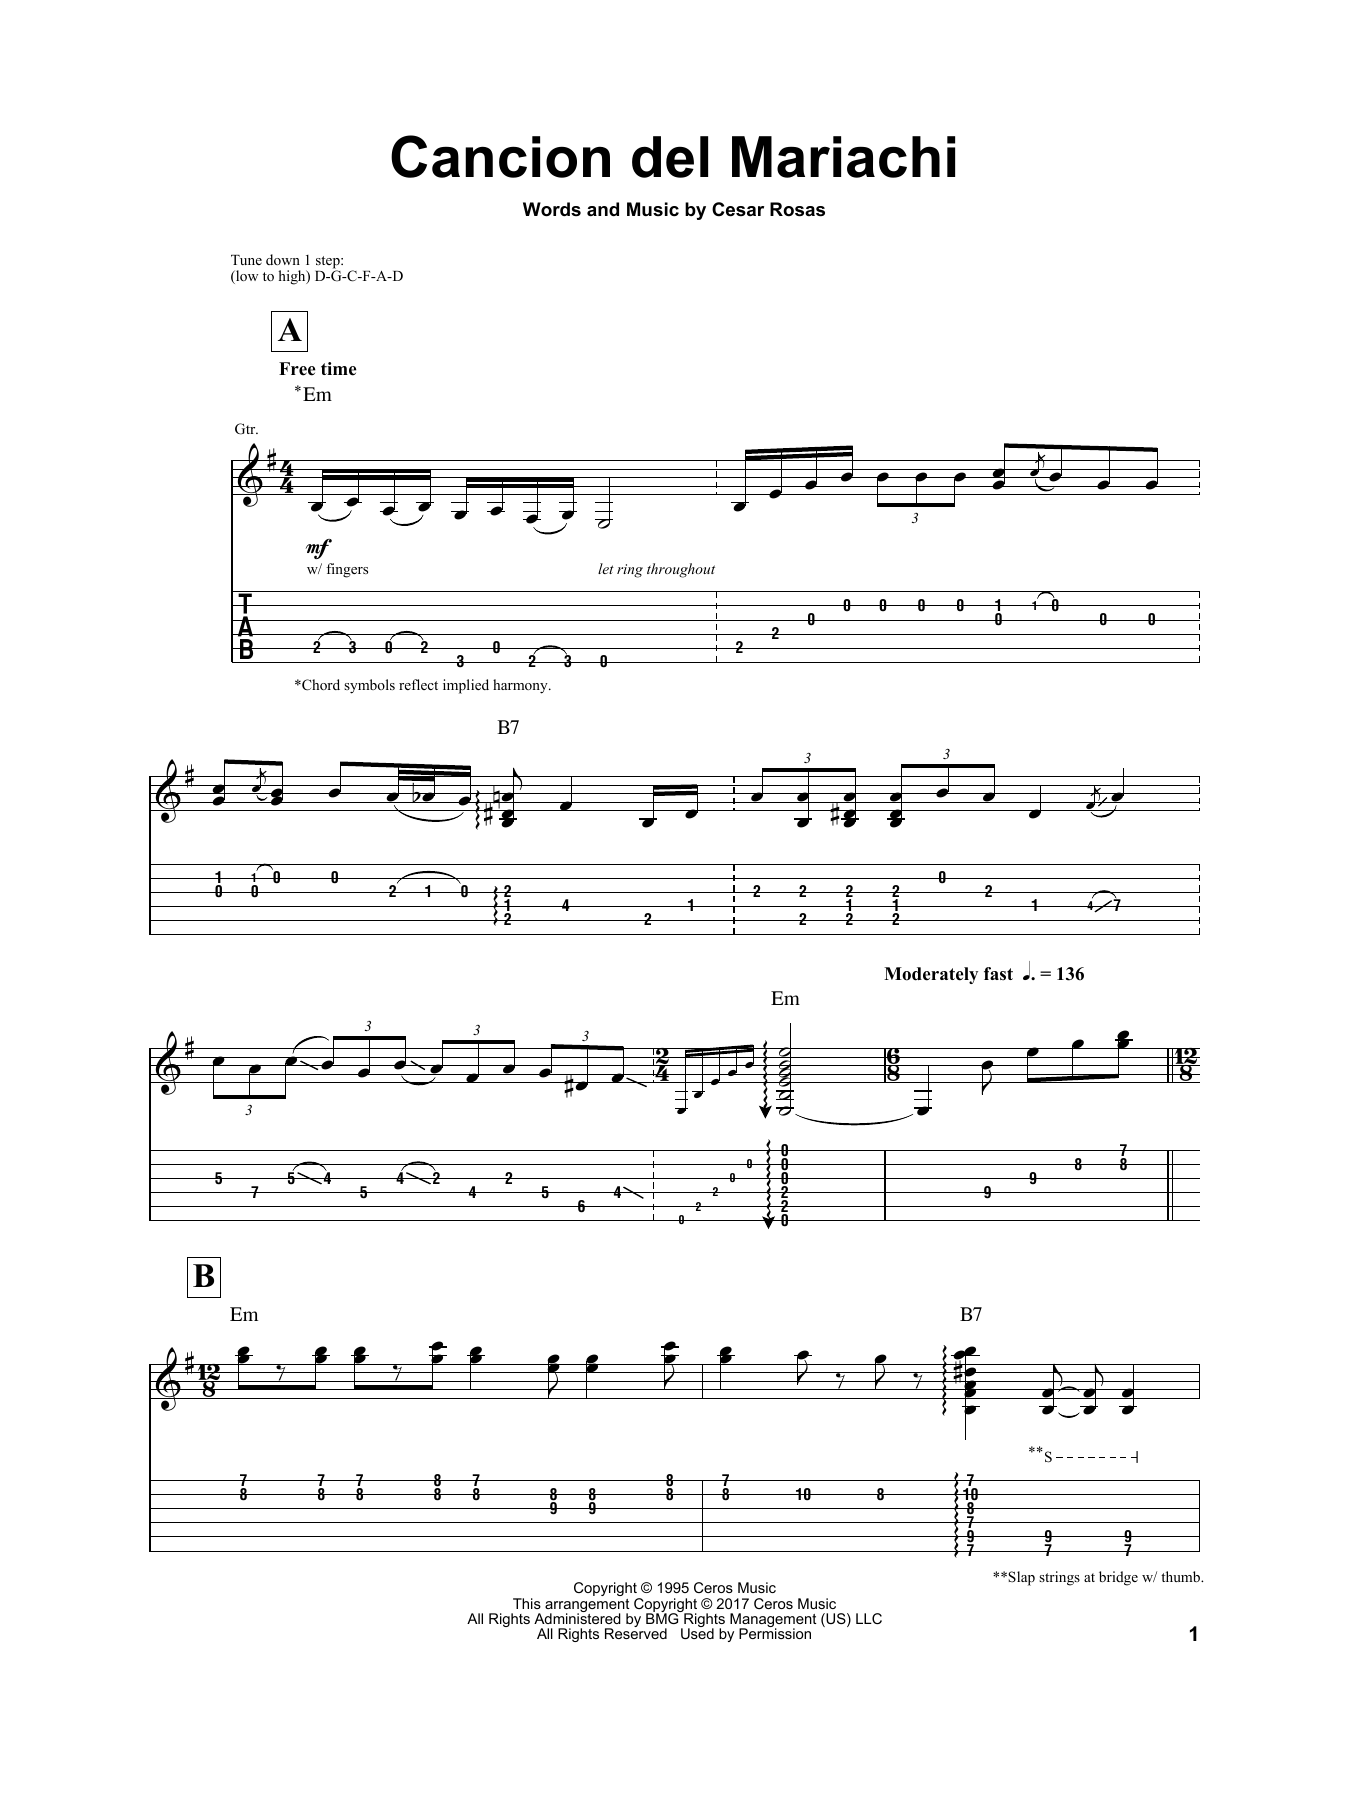 Igor Presnyakov Cancion Del Mariachi Sheet Music Notes & Chords for Guitar Tab - Download or Print PDF